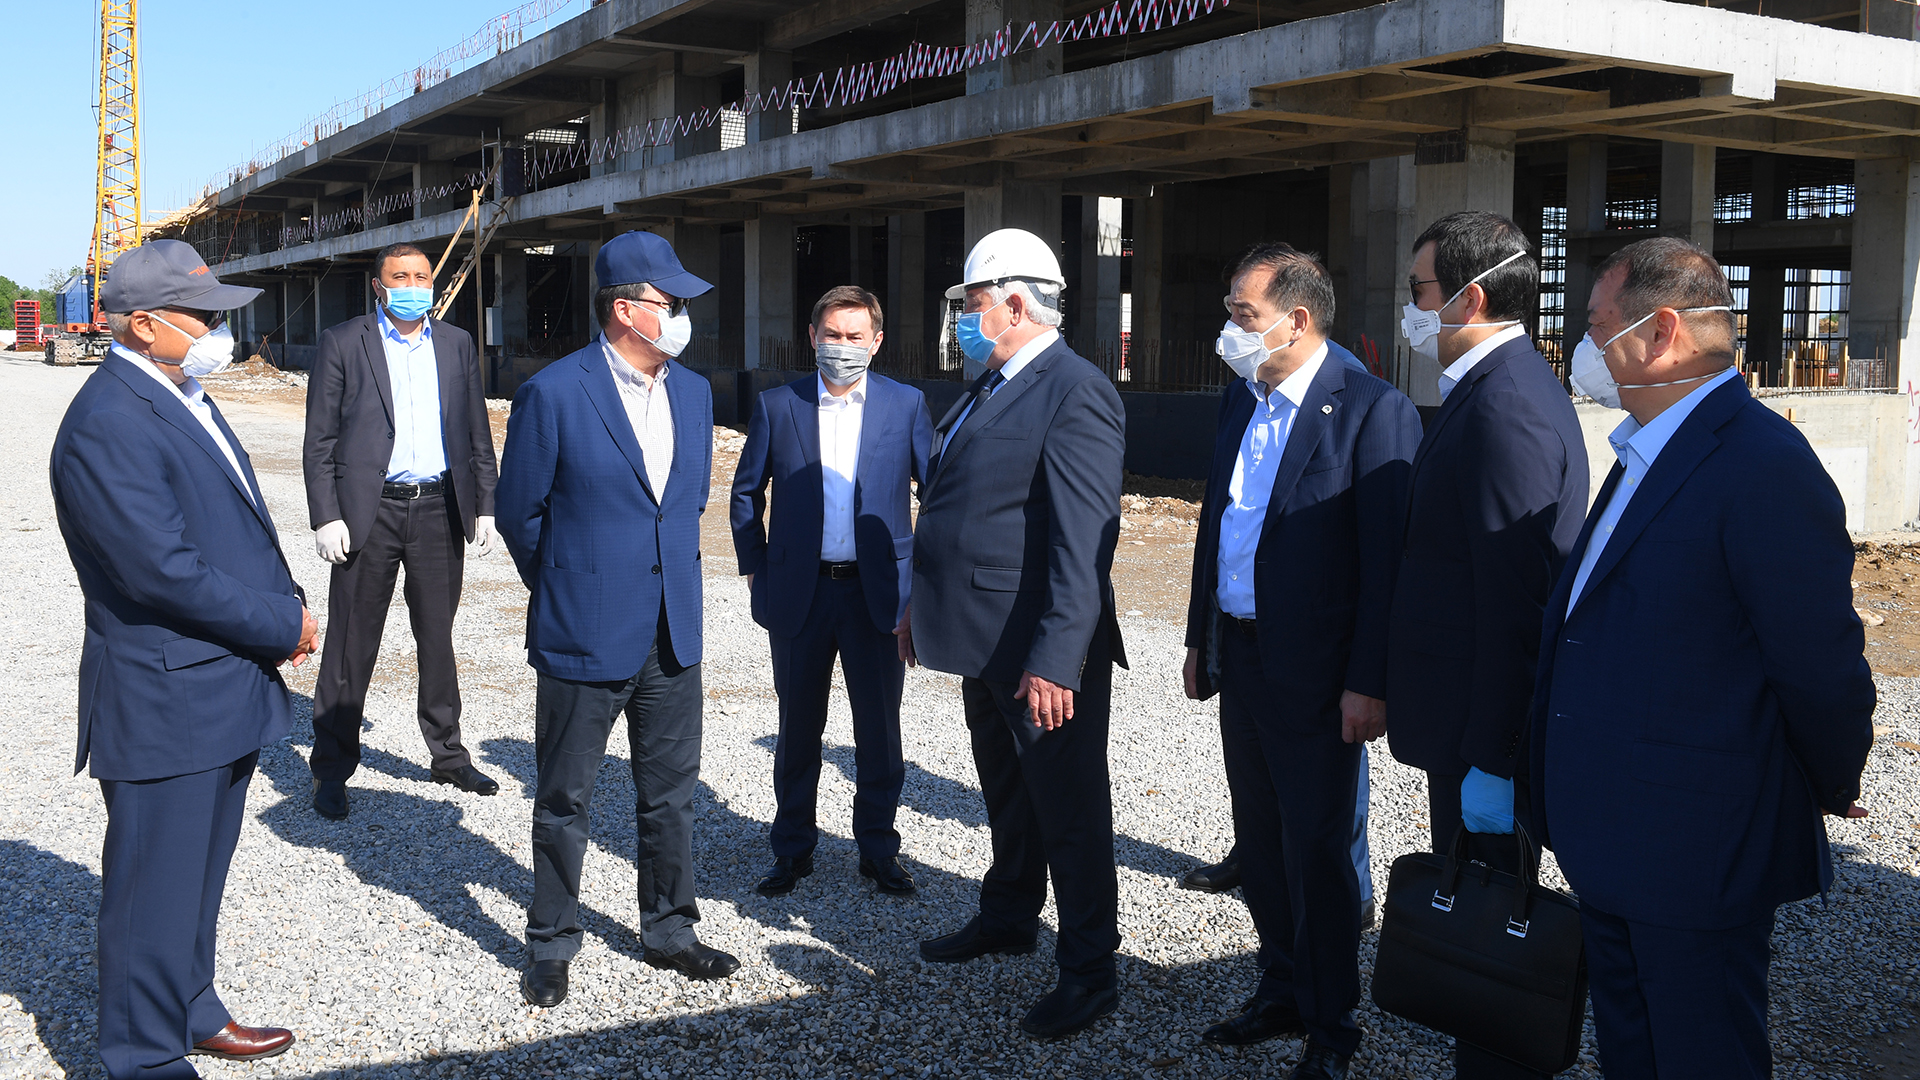 Askar Mamin inspects development projects of Shymkent and Turkistan